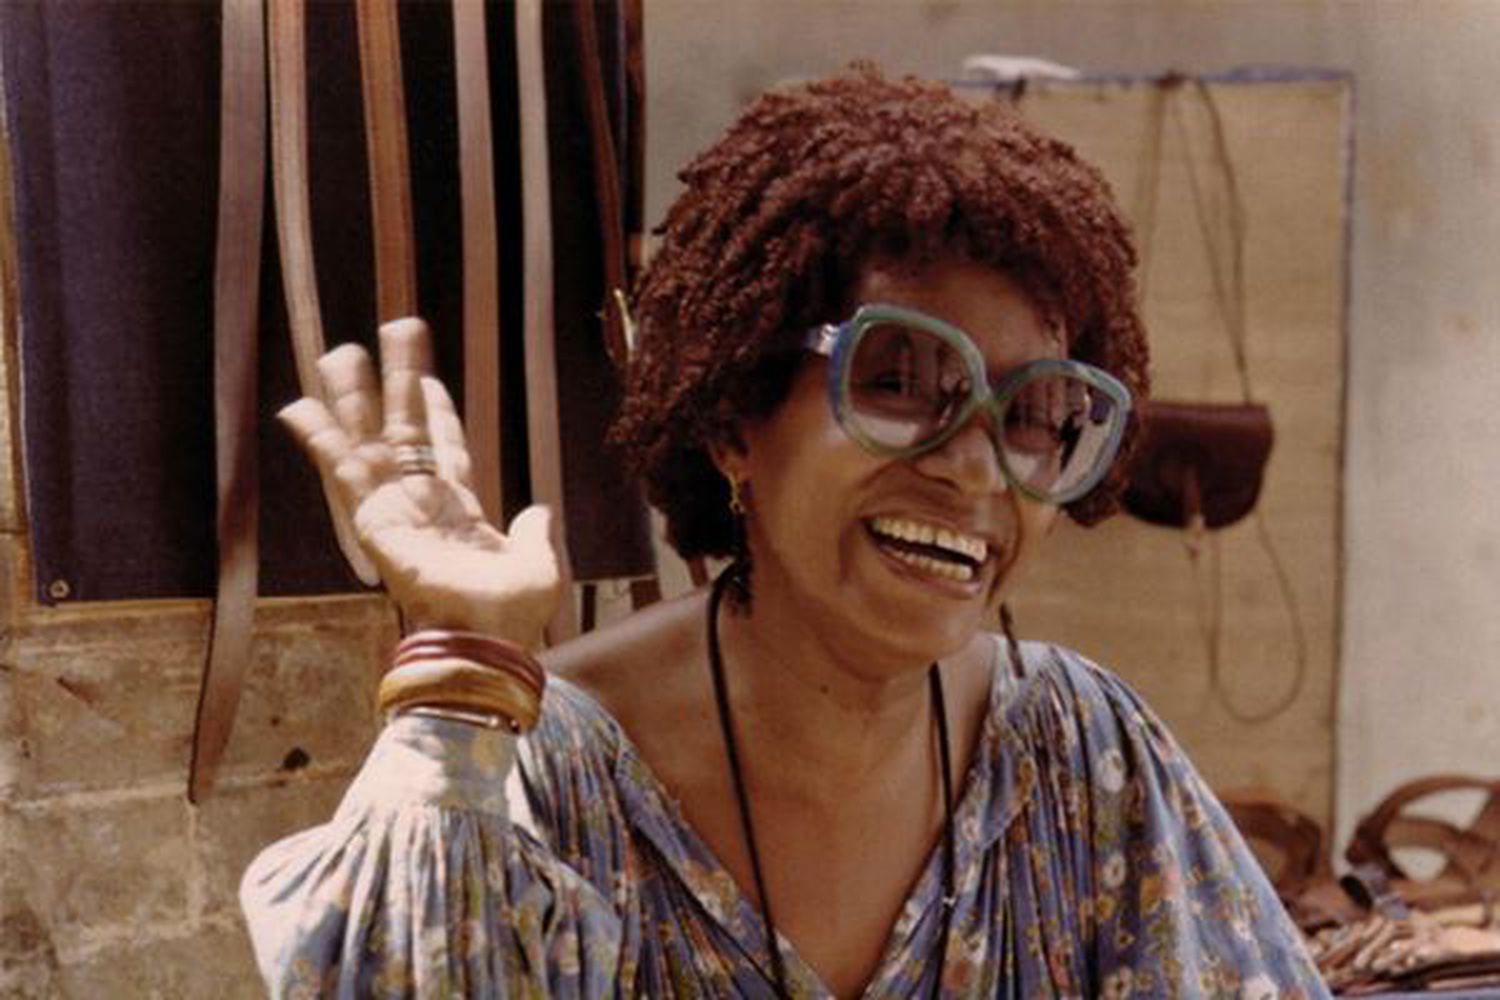 Lélia Gonzalez - Literatura Afro-Brasileira